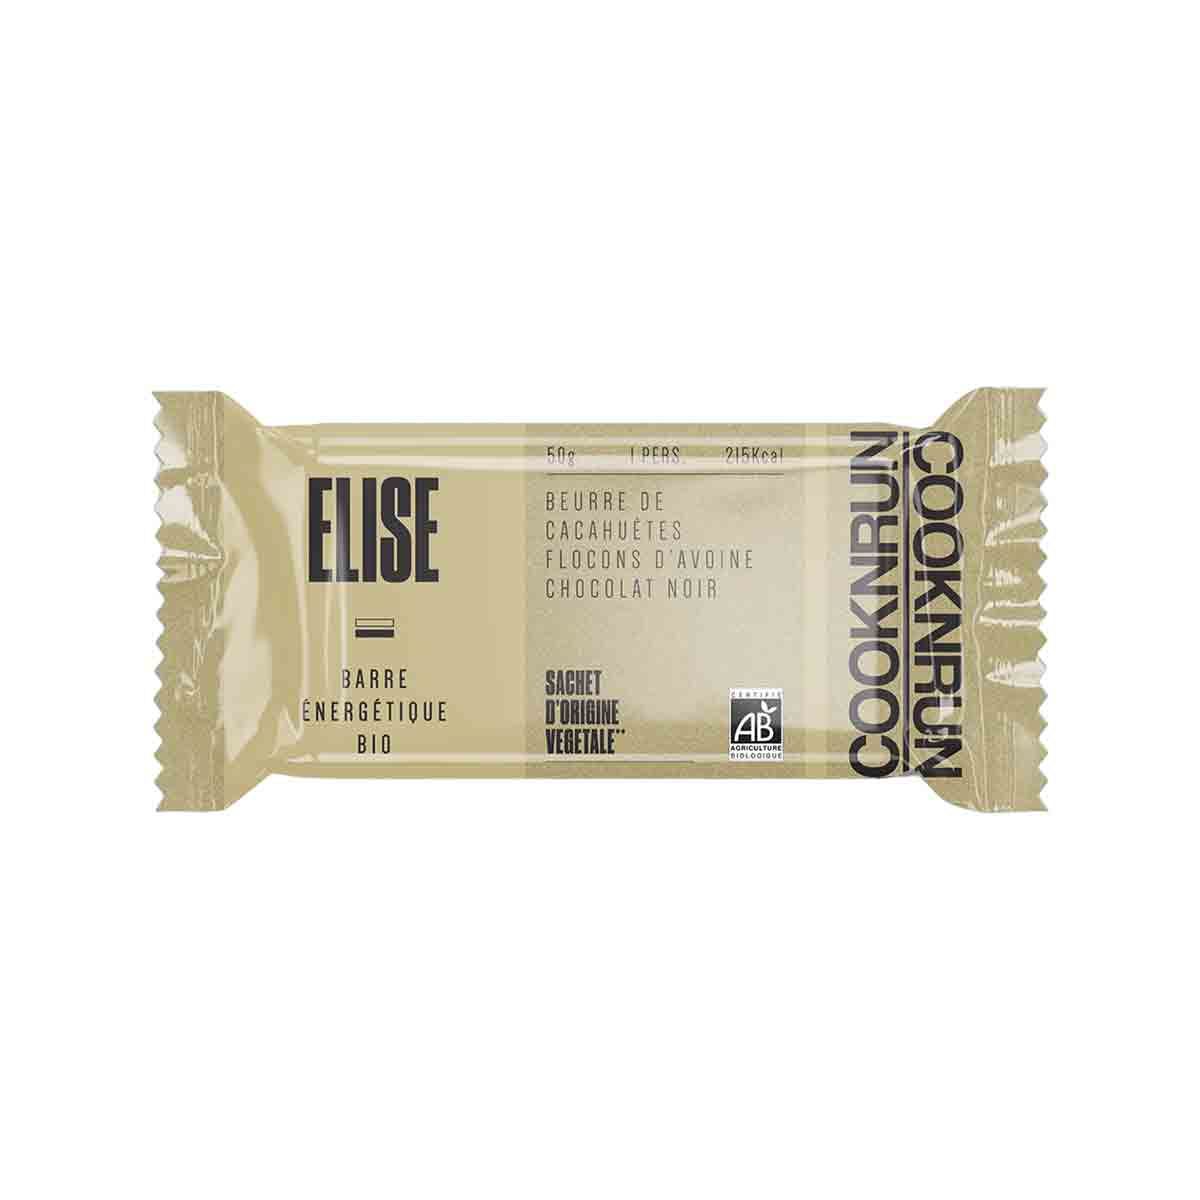 Elise organic energy bar - Peanut butter, oats, chocolate